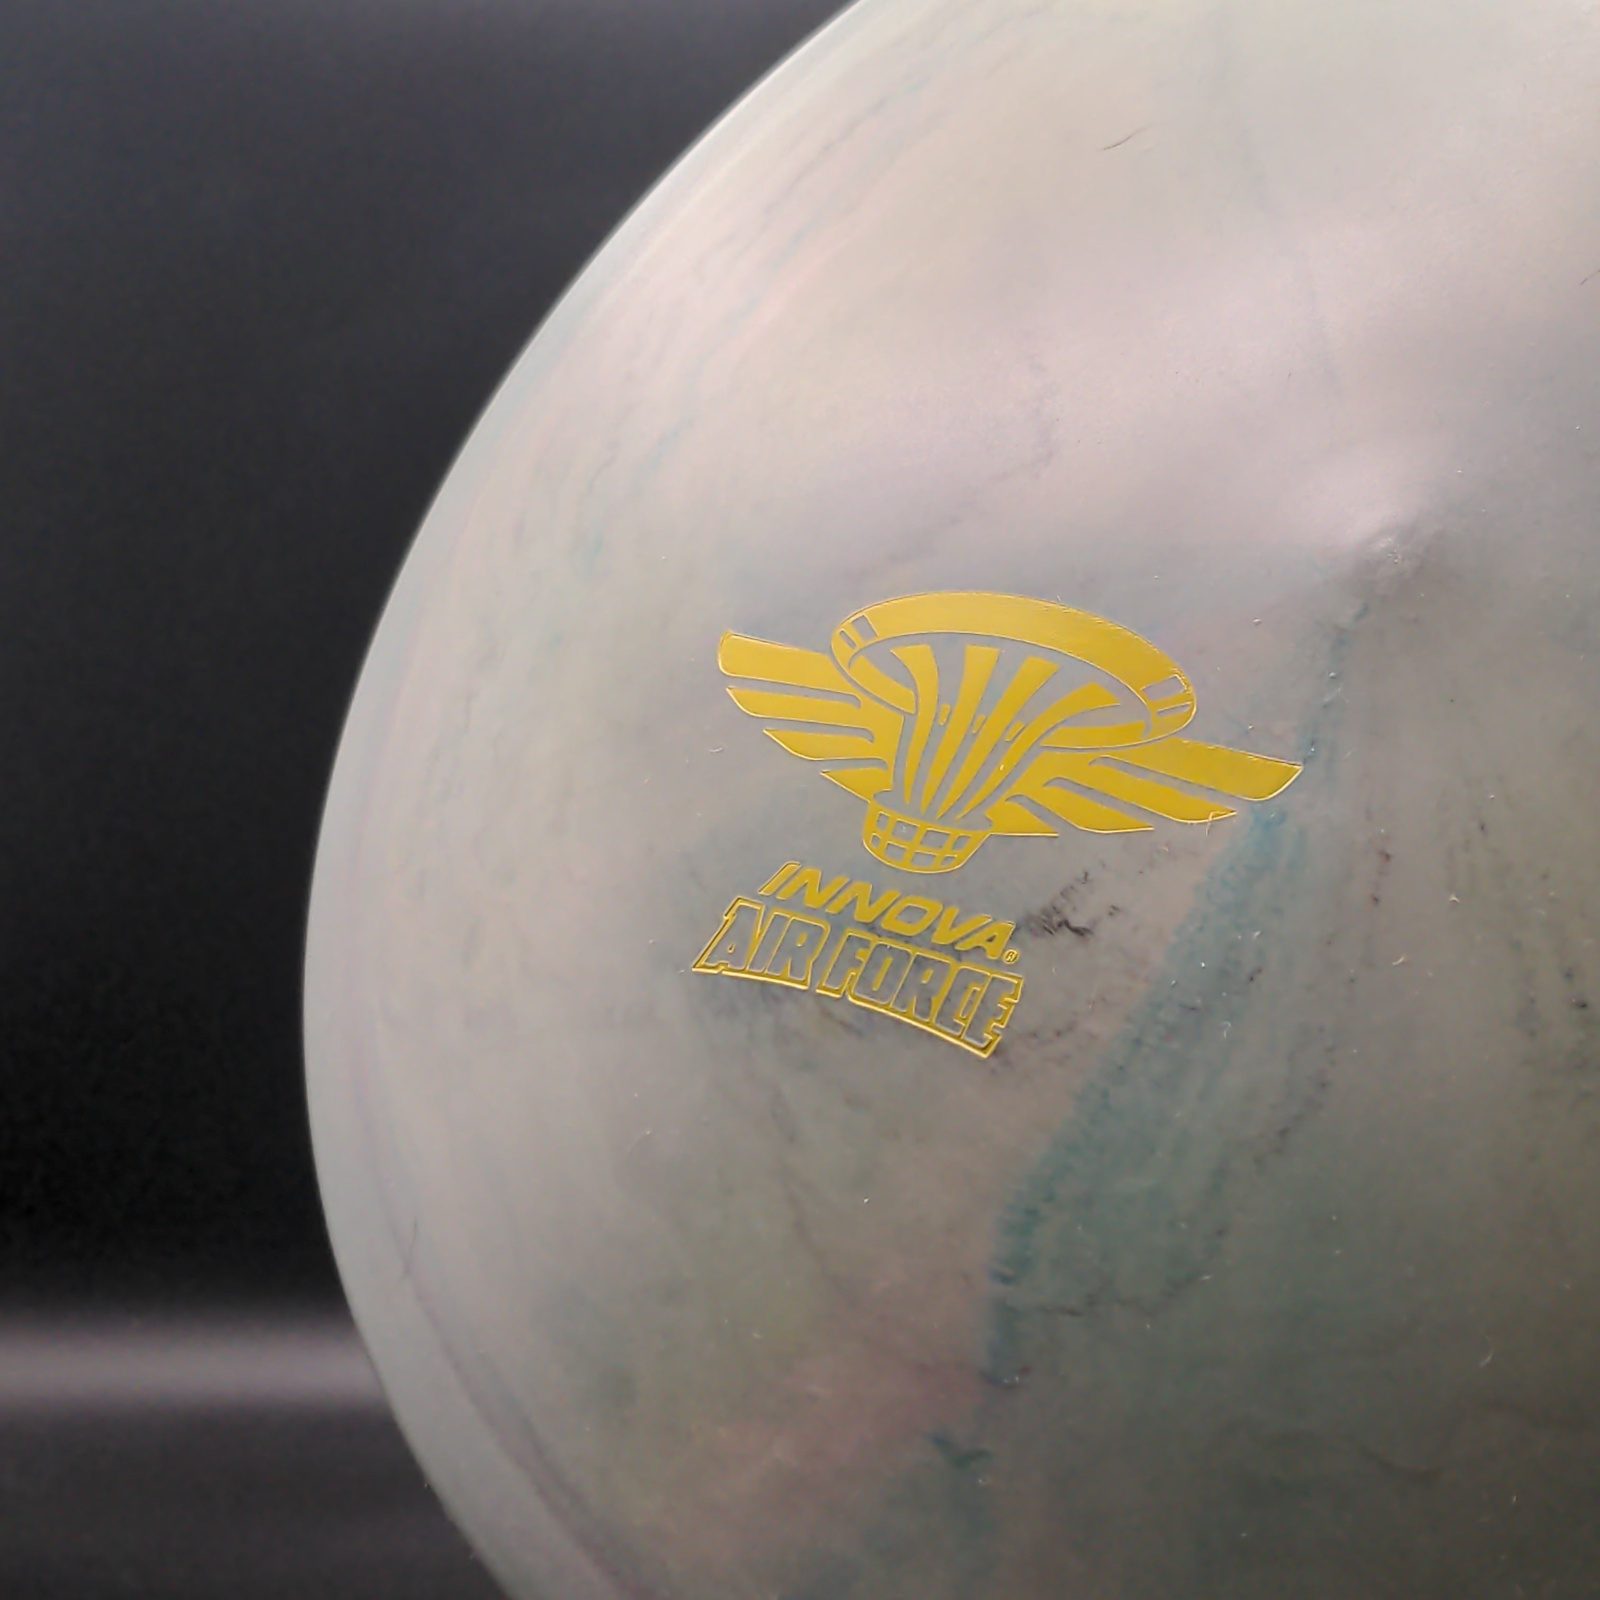 Galactic XT Stingray - Innova Air Force Mini Stamp! Innova